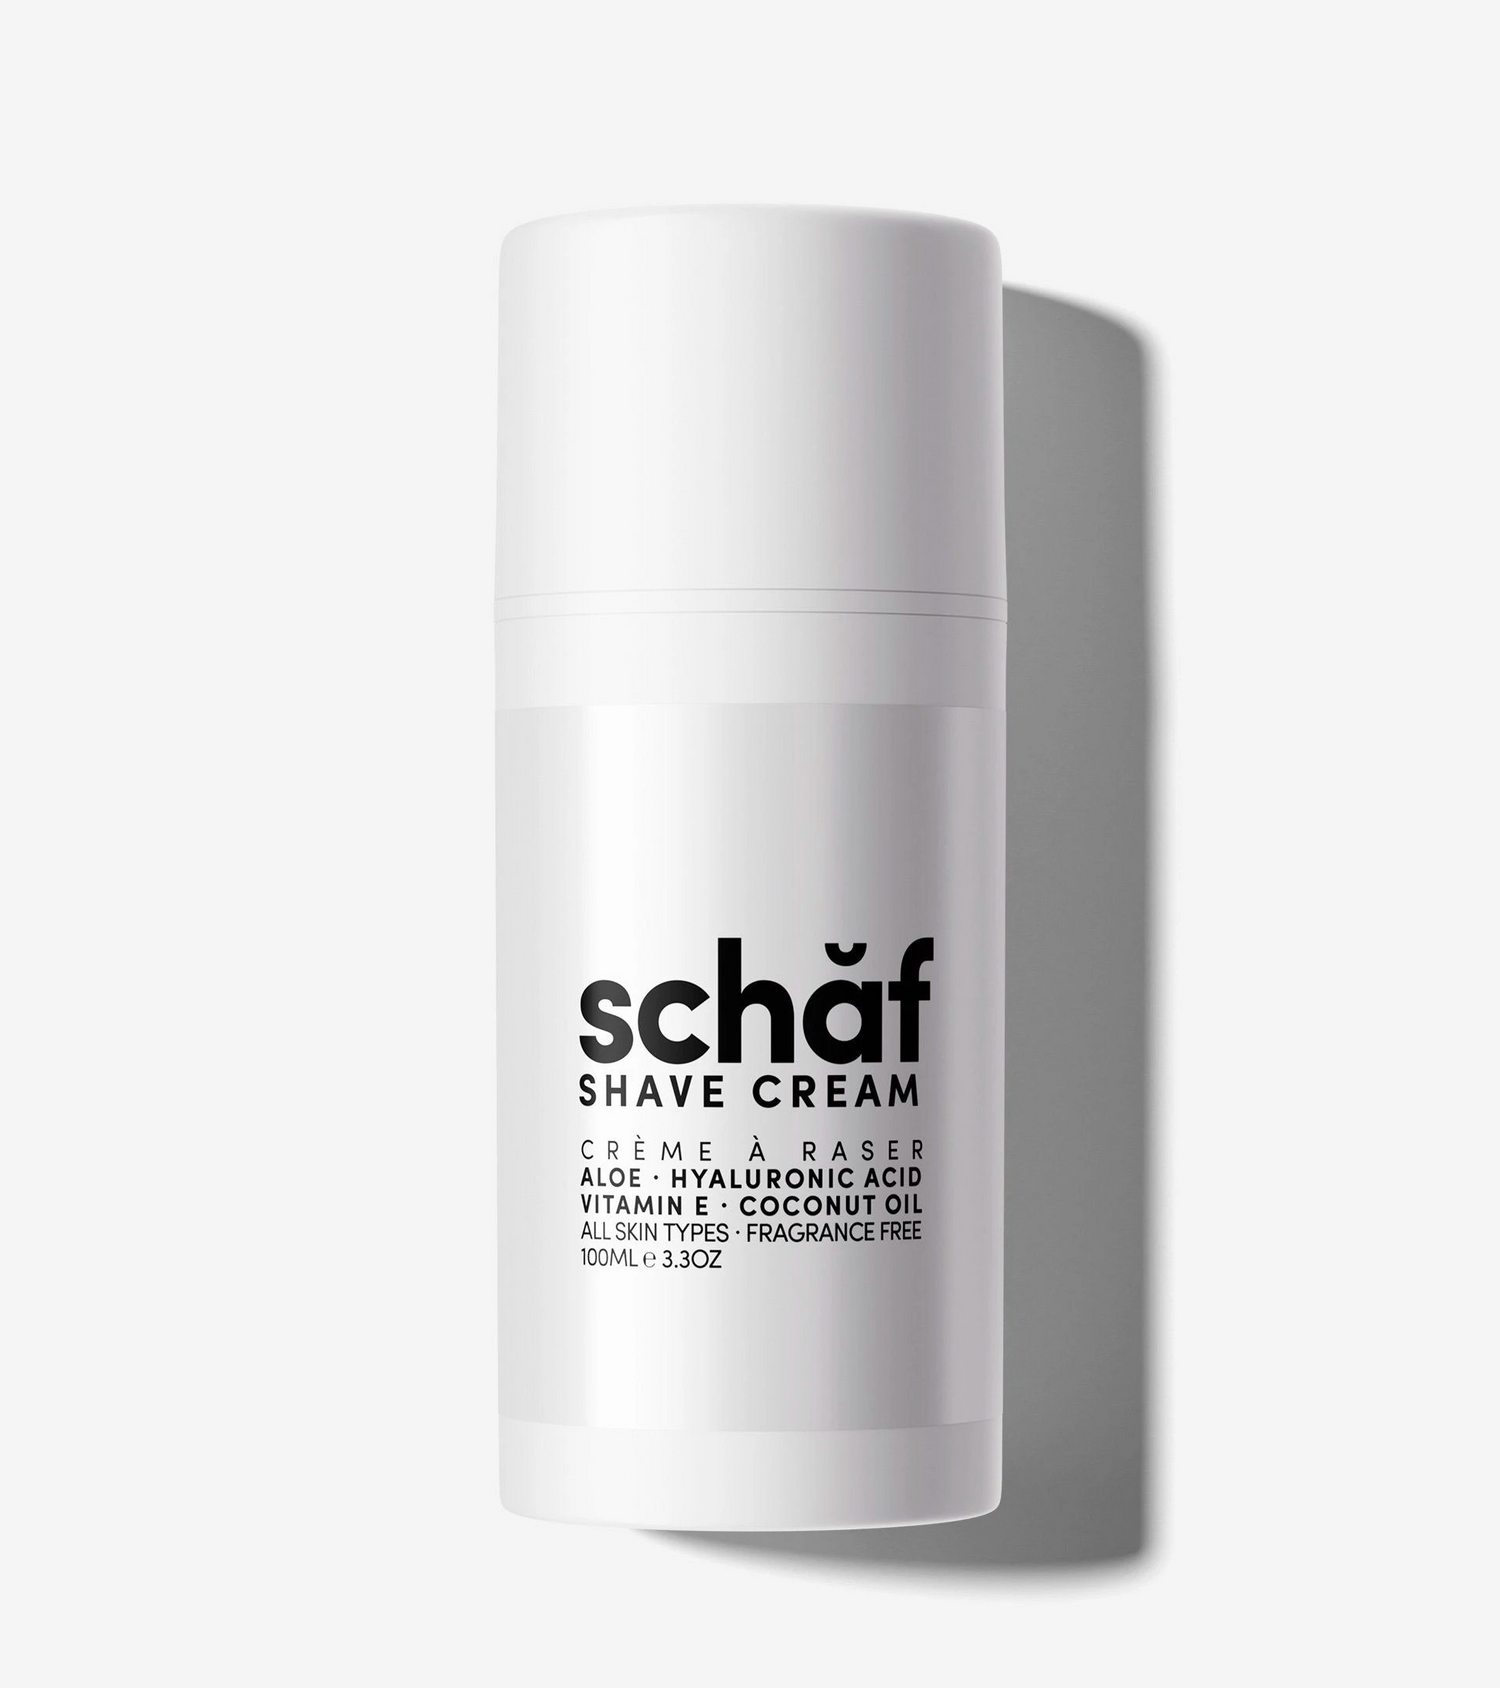 Schaf Shave Cream Canada